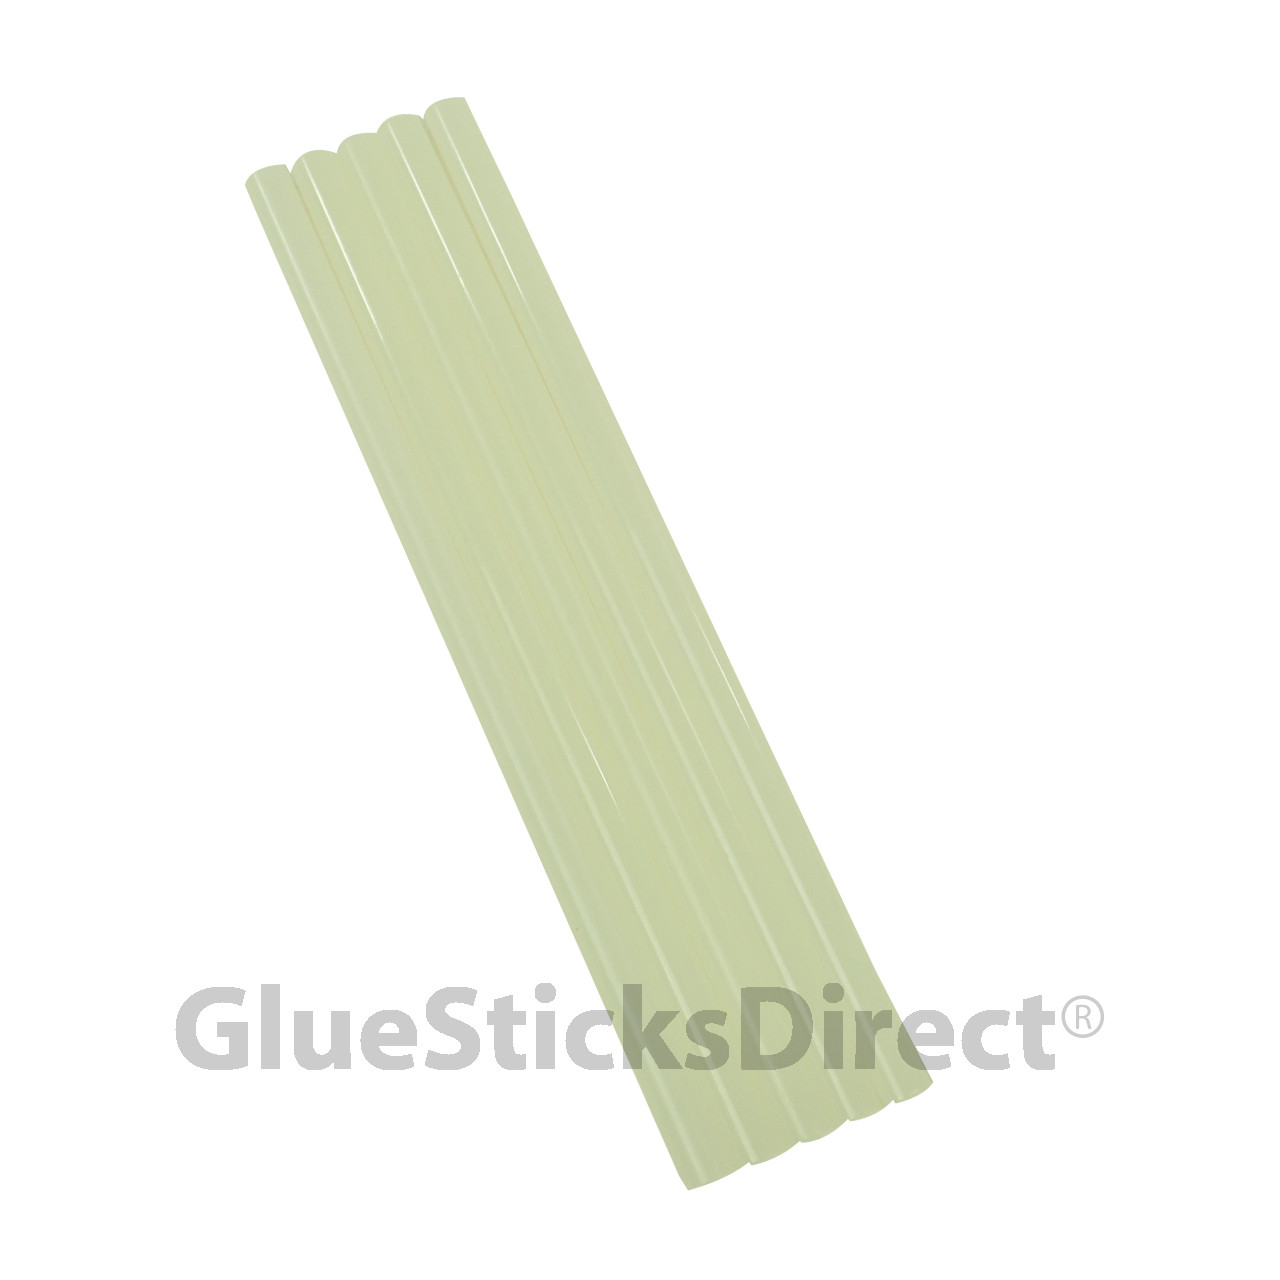 GlueSticksDirect Wholesale™ Hot Melt Glue Sticks 7/16 X 10 25 lbs Bulk -  GlueSticksDirect